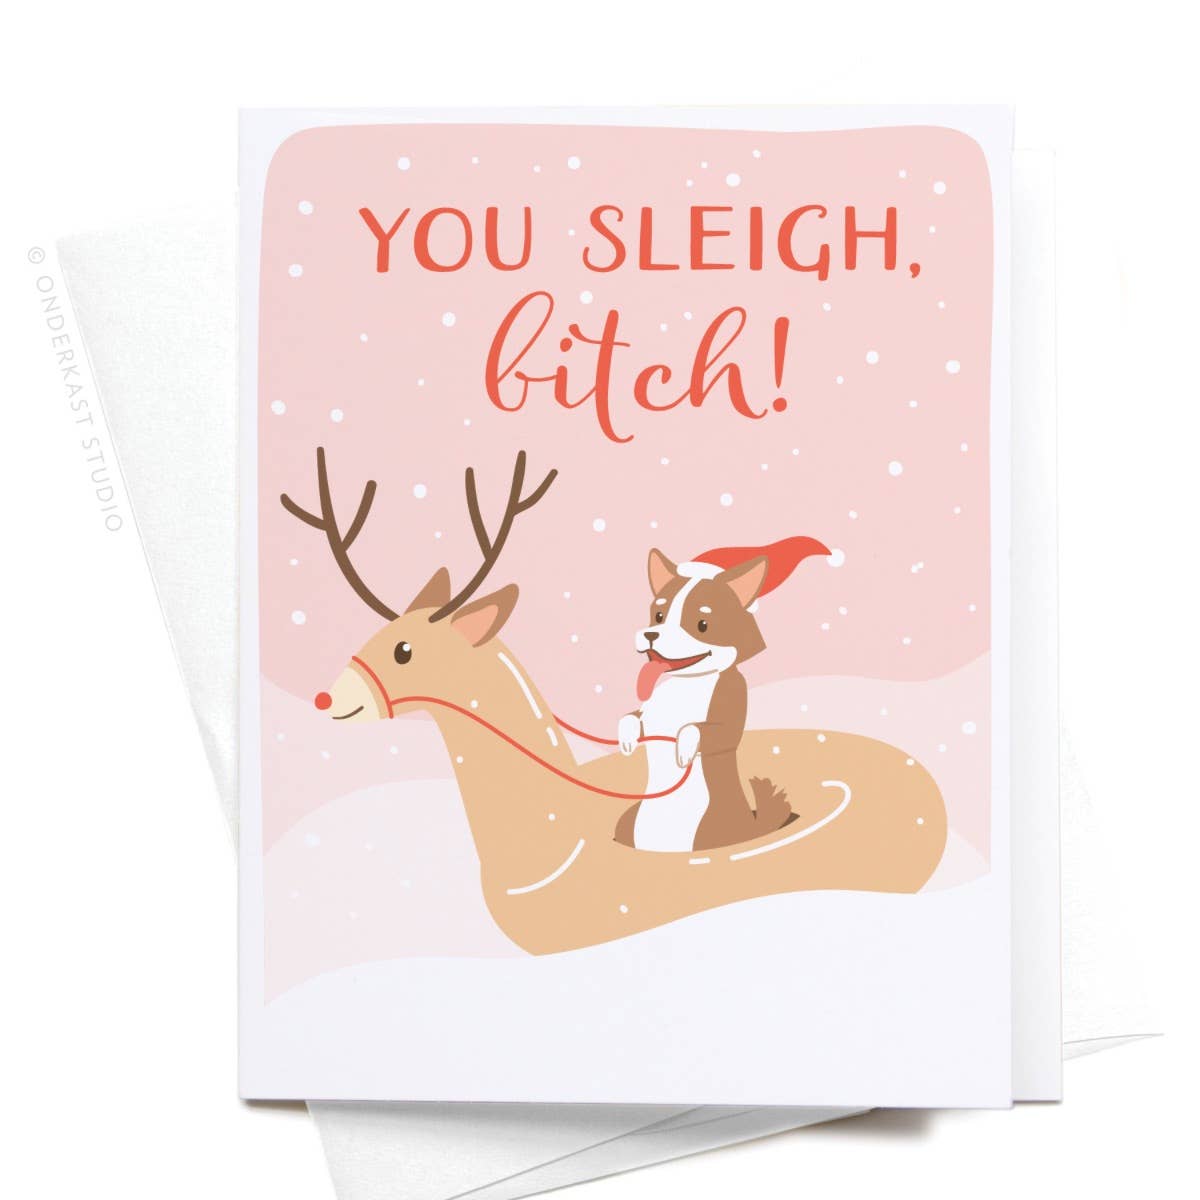 You Sleigh B*tch! Greeting Card